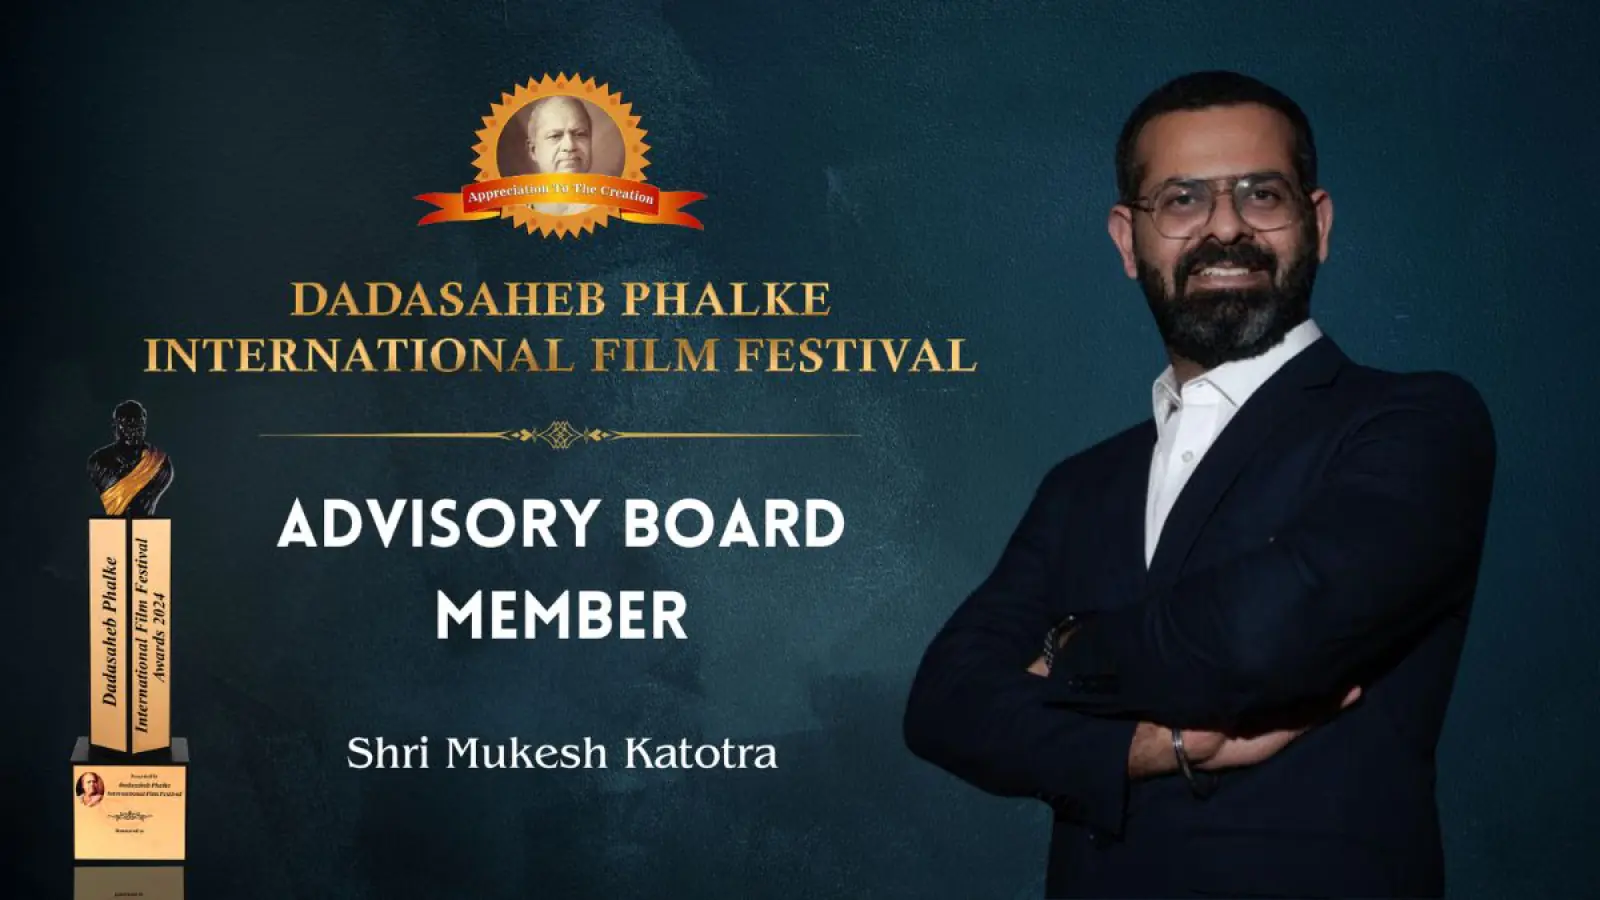 Mukesh Katotra, Appointed as Advisory Board Member of Dadasaheb Phalke International Film Festival, Adding Expertise to Indian Film Industry